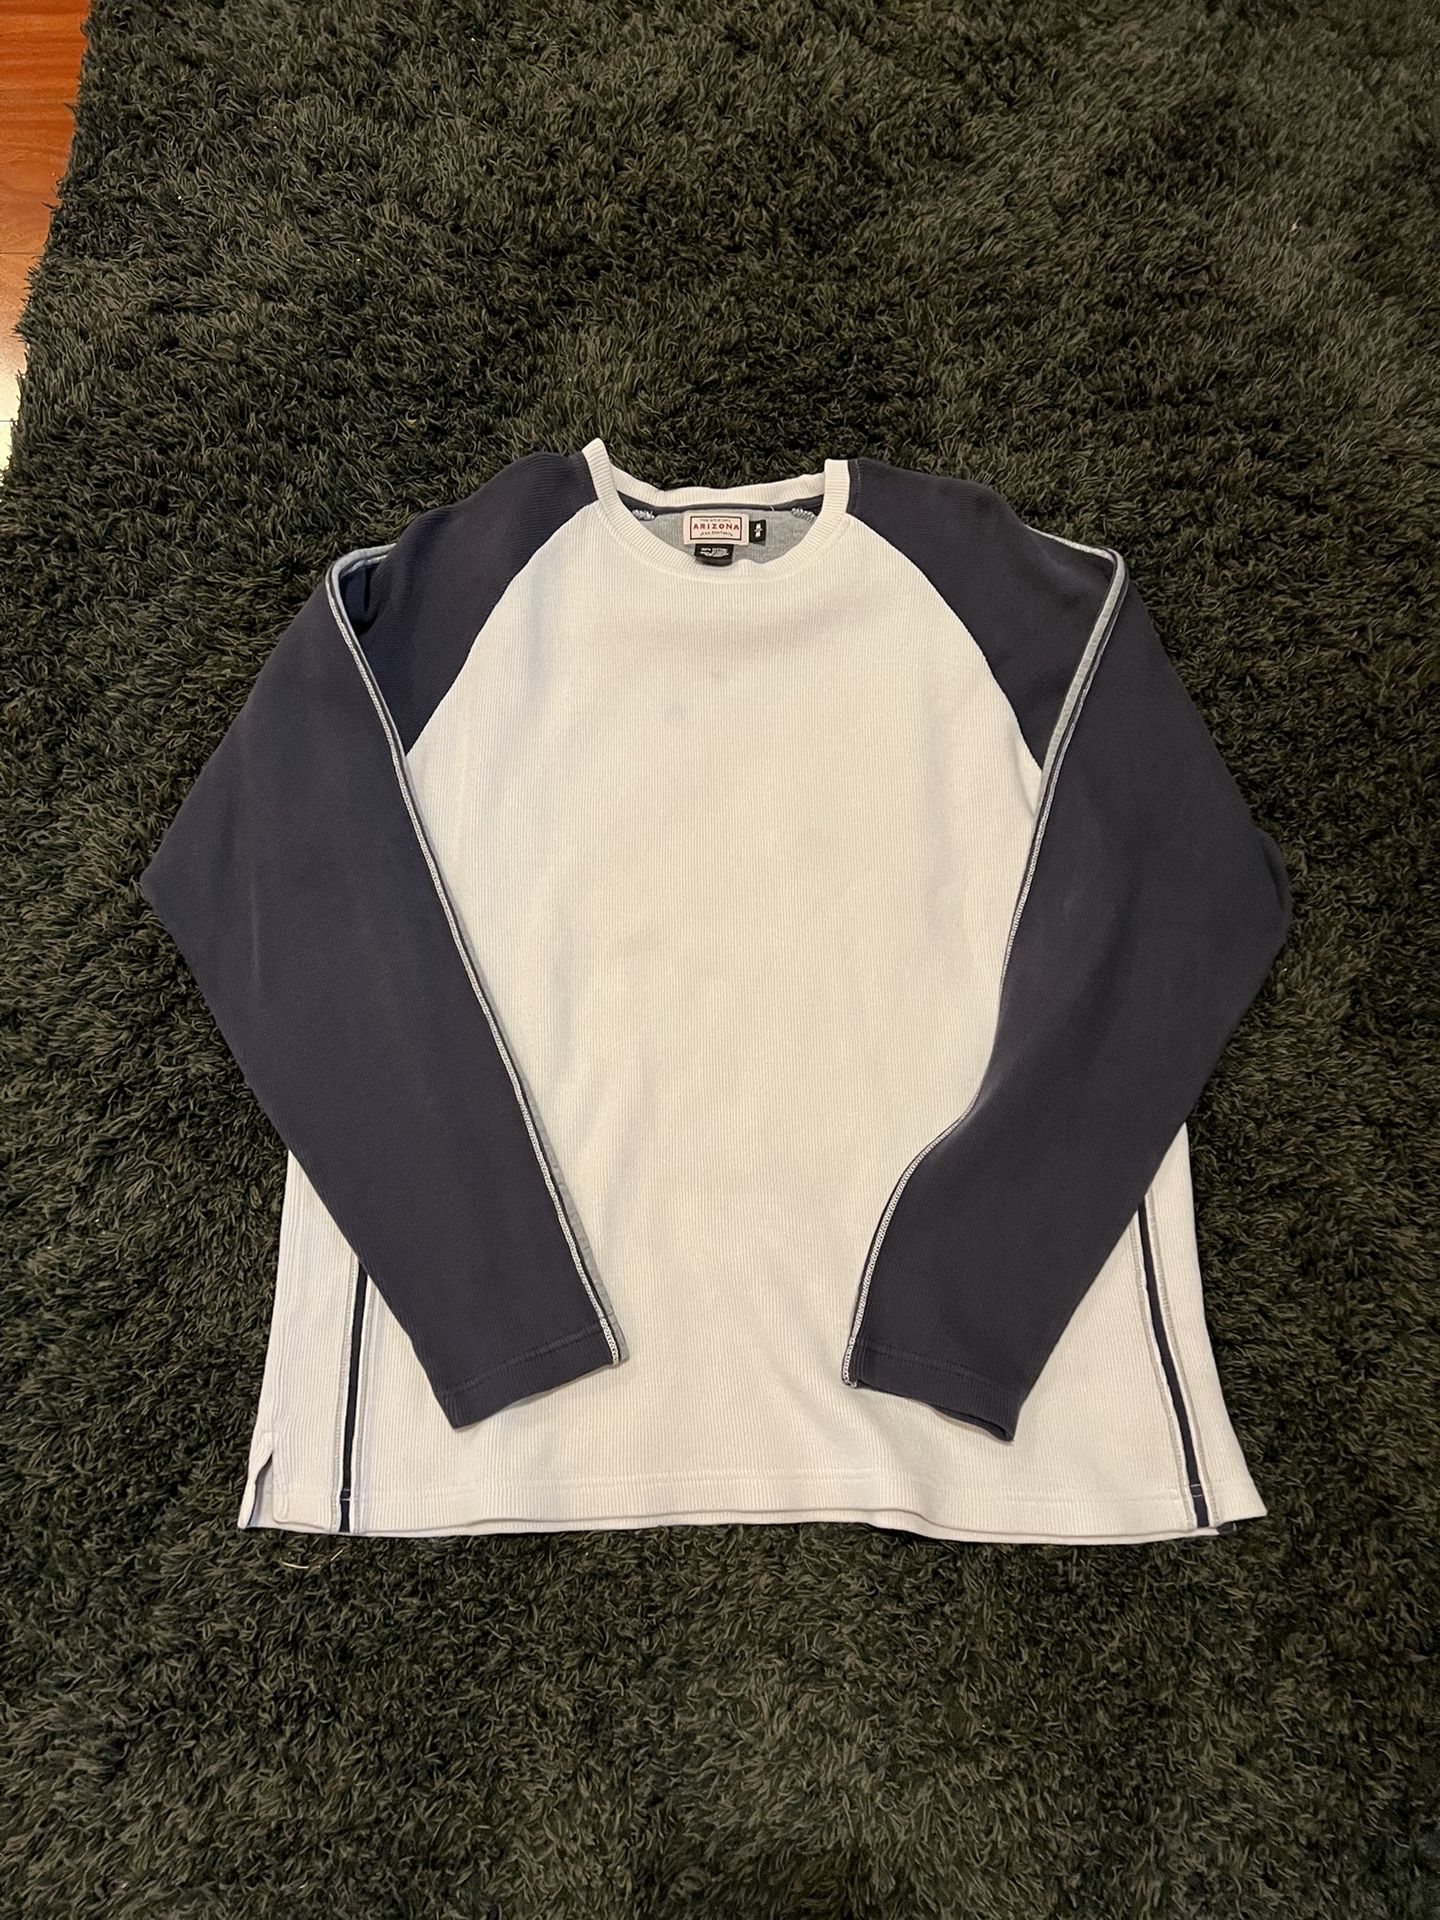 Arizona Sweatshirt Size L Navy/Cream